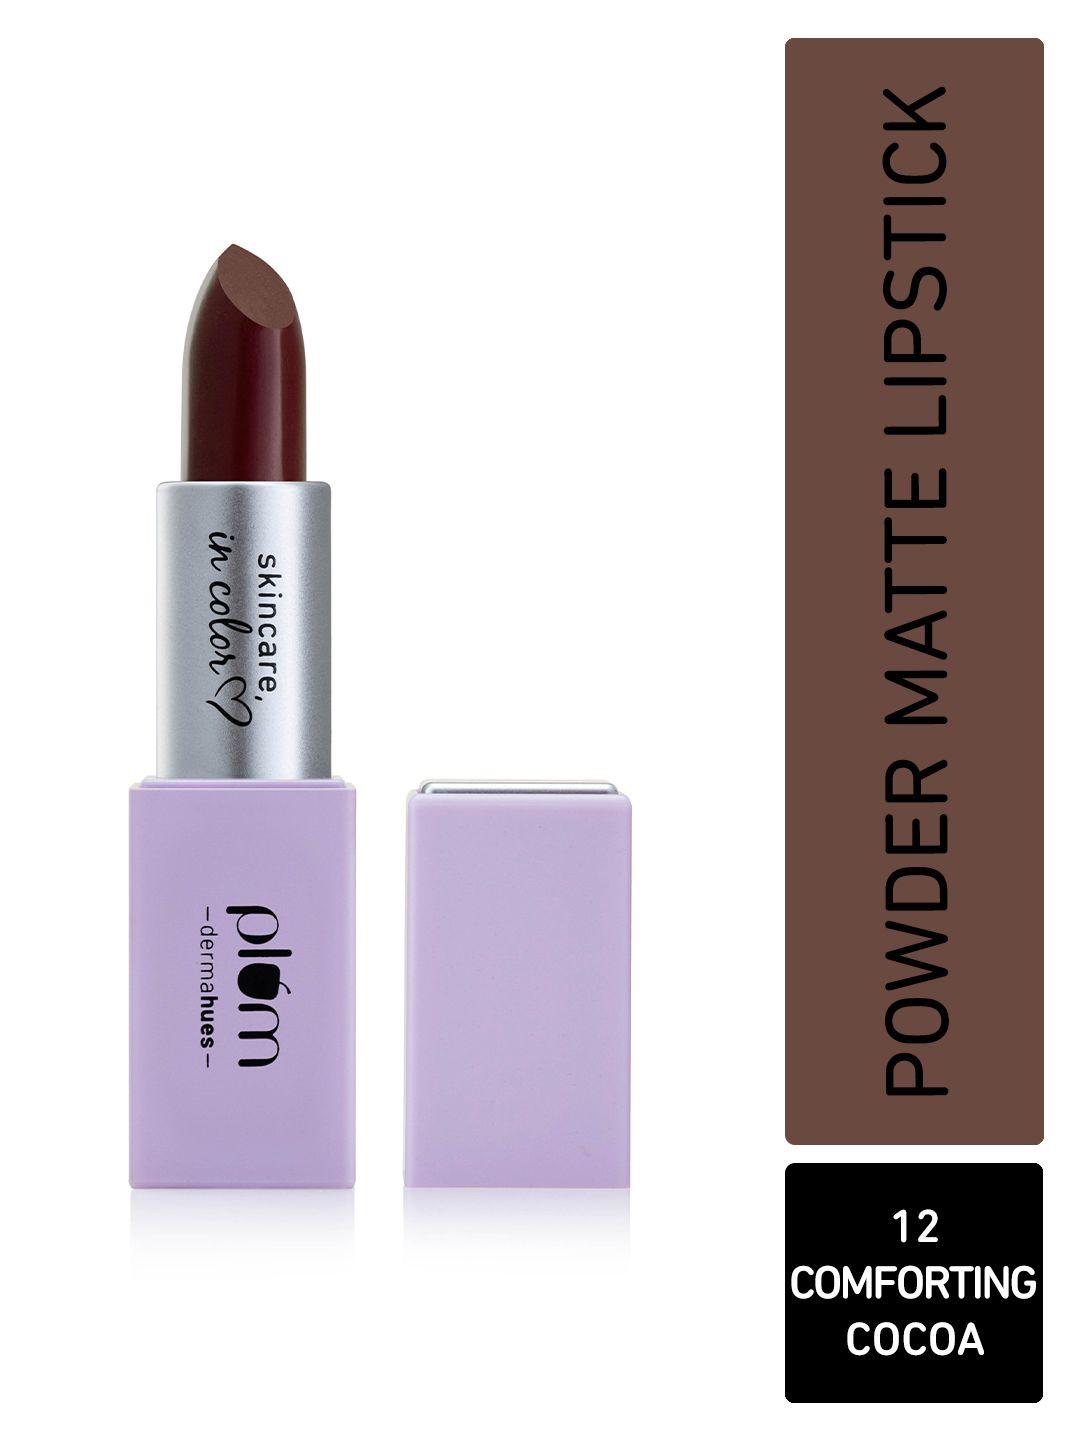 plum velvet haze powder matte lipstick with spf 30 - 4.2g - comforting cocoa 12